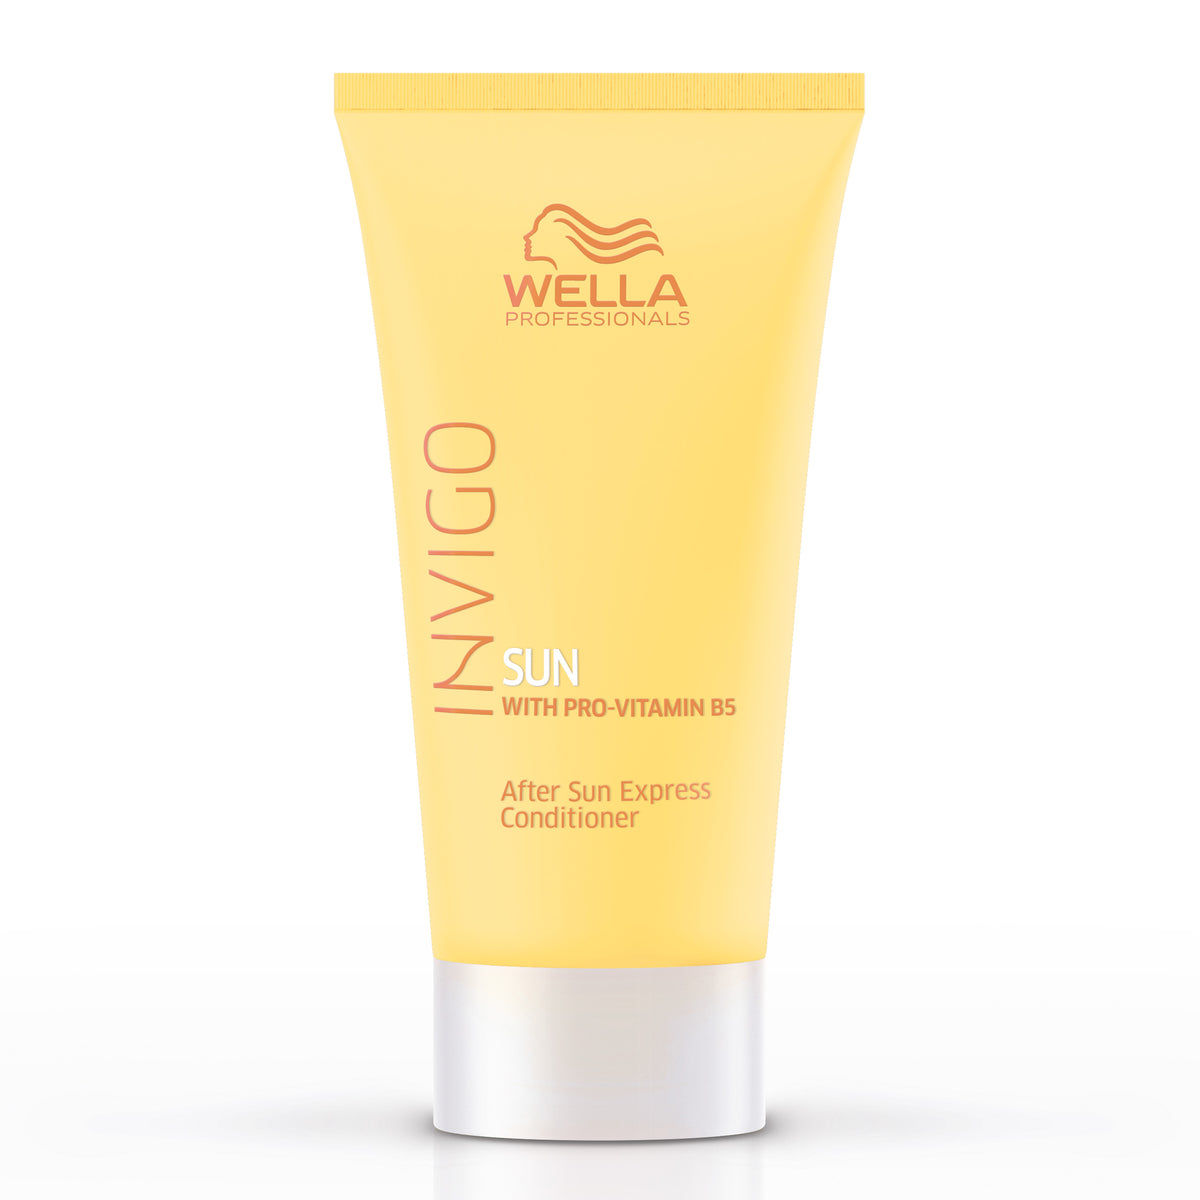 Wella Professionals Invigo Sun After Sun Cleasing Conditioner 30ml